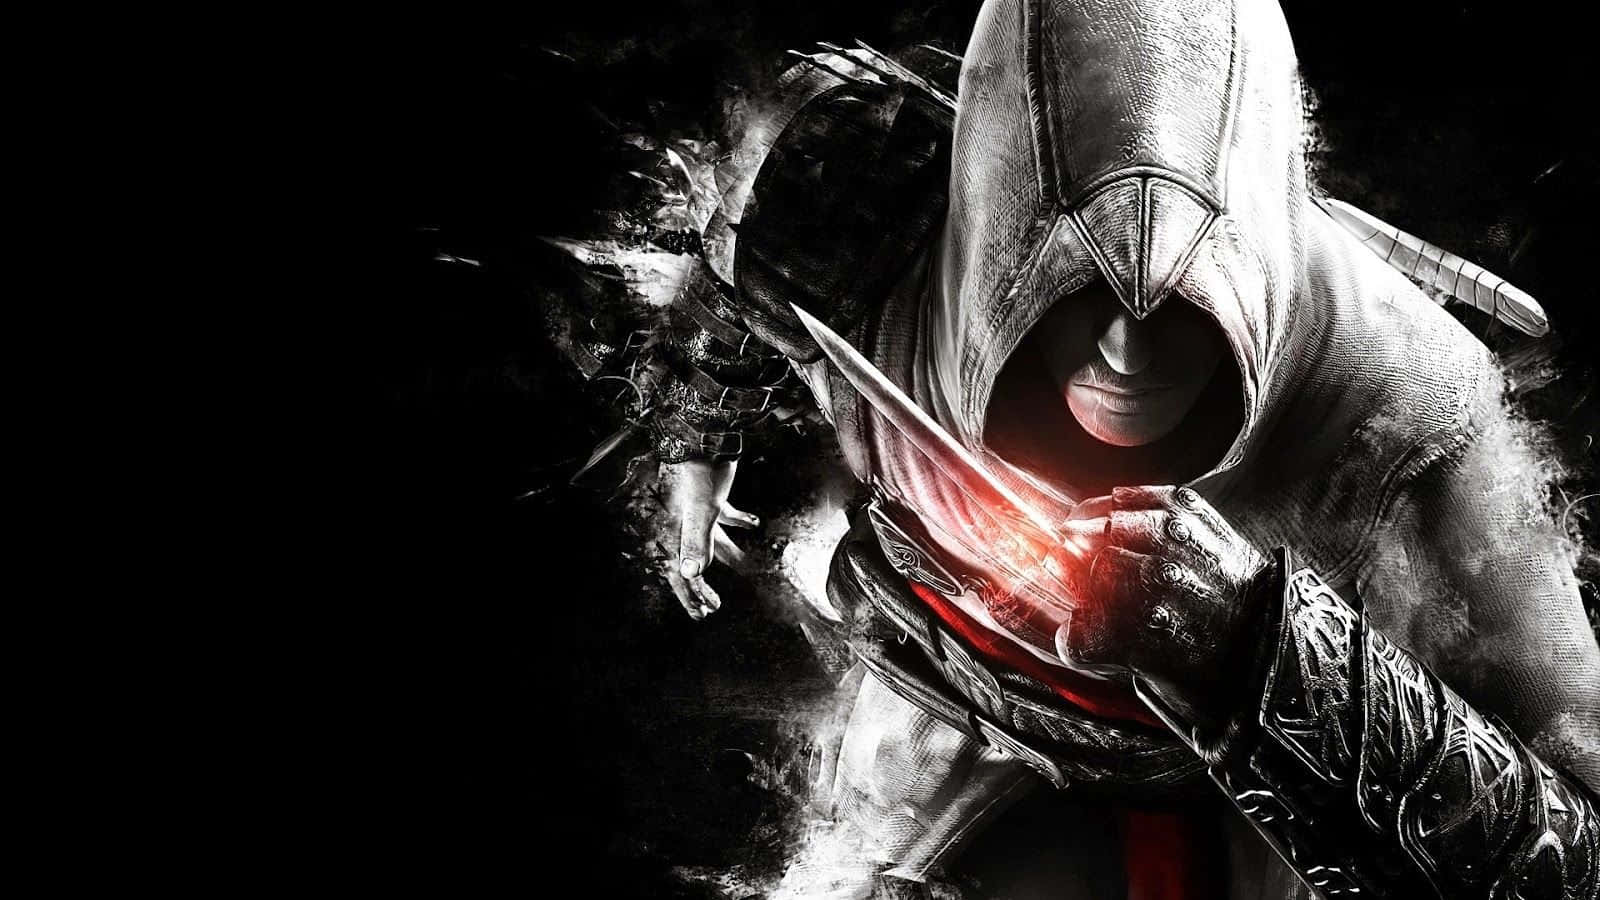 Assassin's Creed Ezio - Master Assassin on a mission Wallpaper